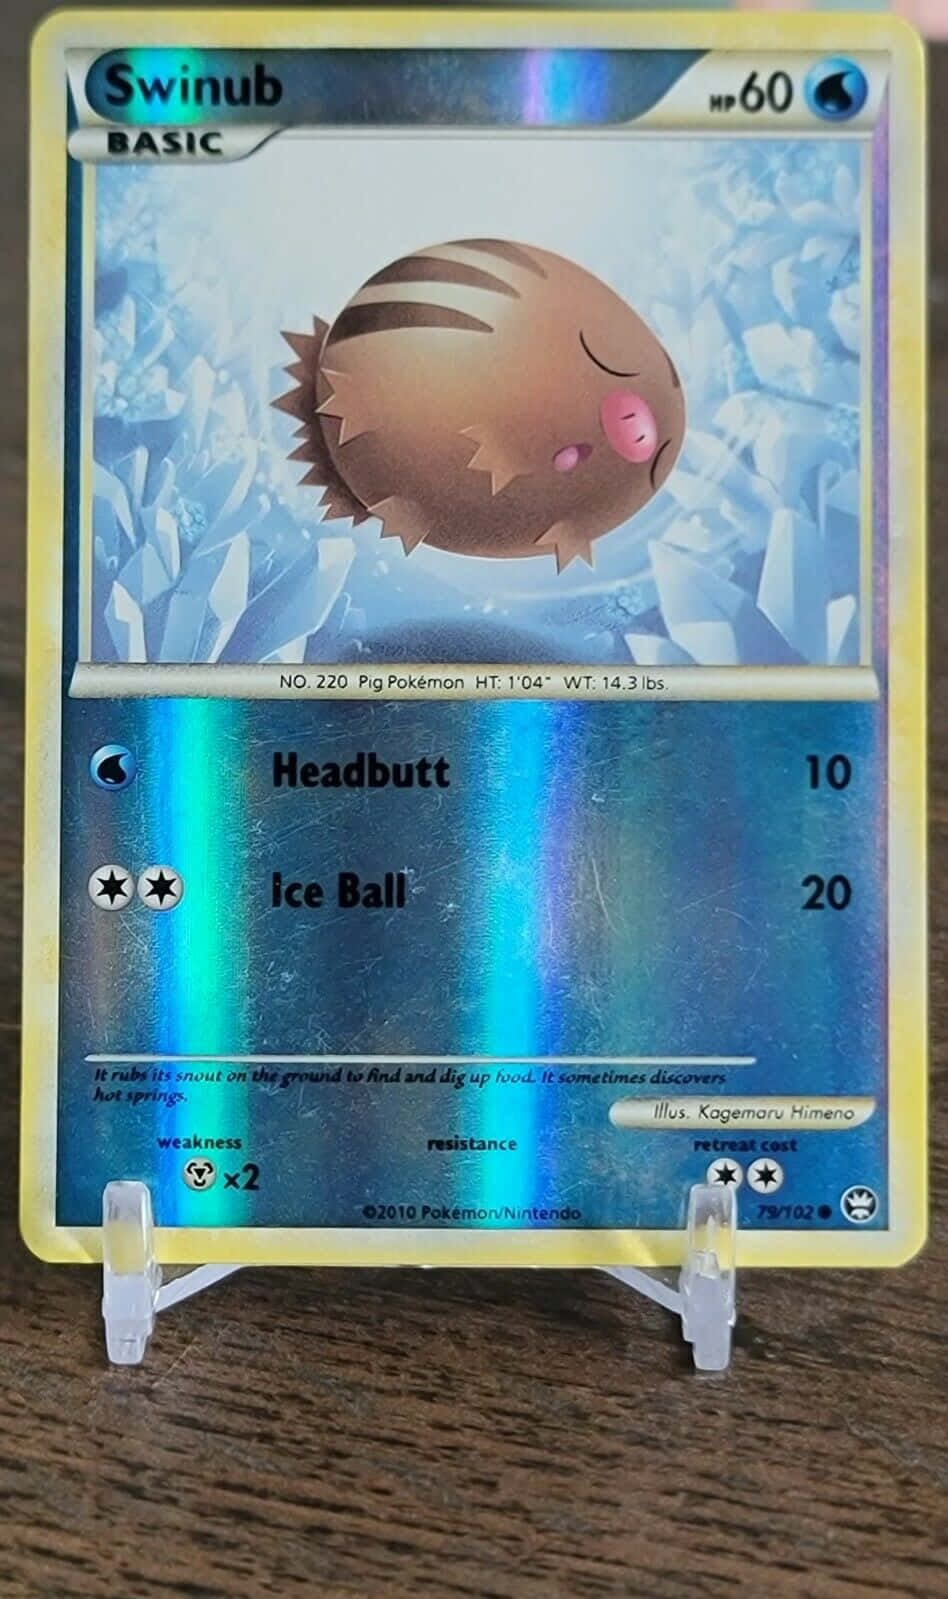 Shiny Swinub Pokemon Card Wallpaper